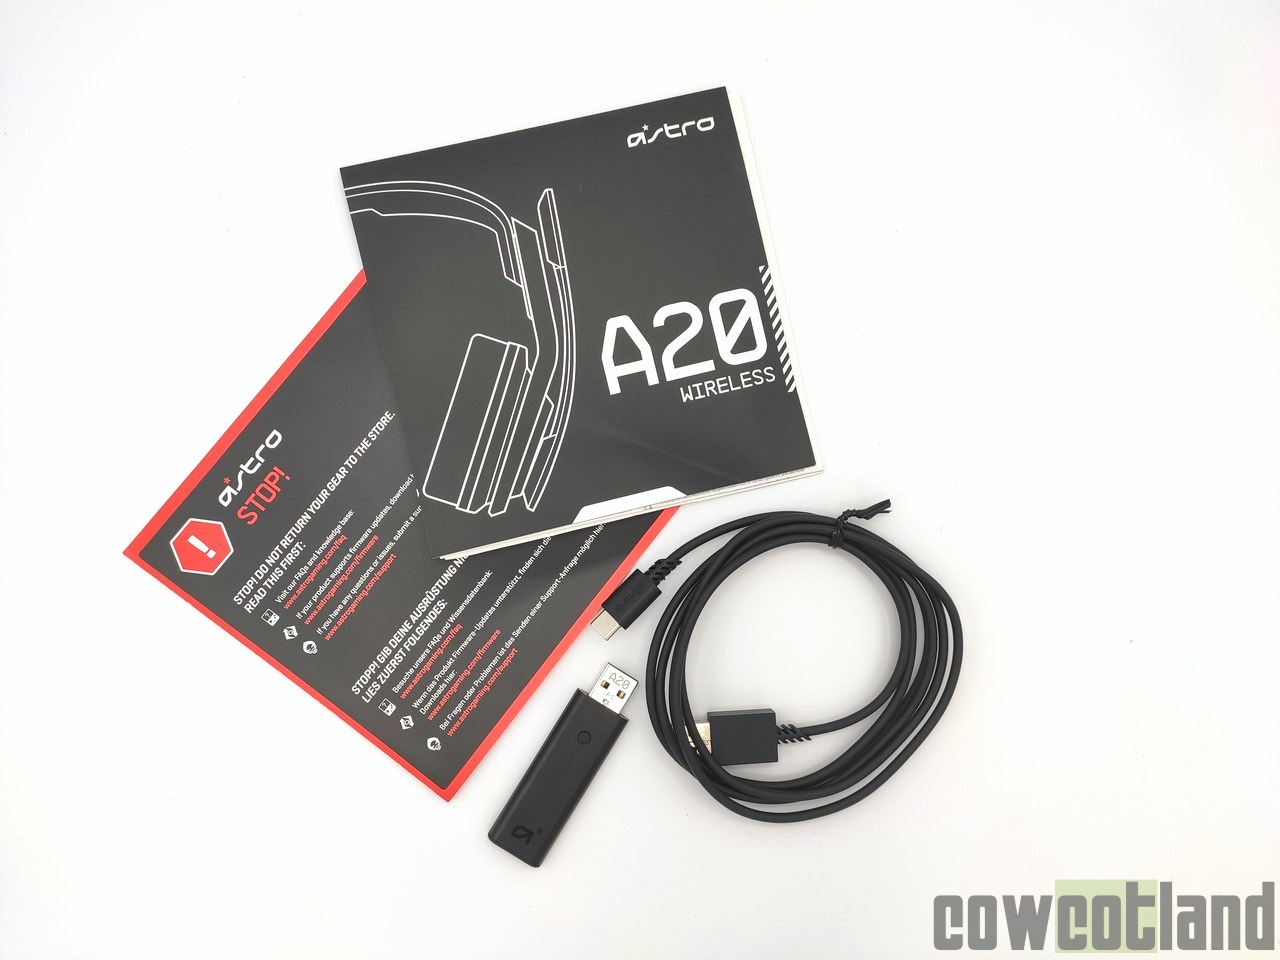 Image 44650, galerie Test casque ASTRO Gaming A20 Wireless, un bon rapport qualit / prix !